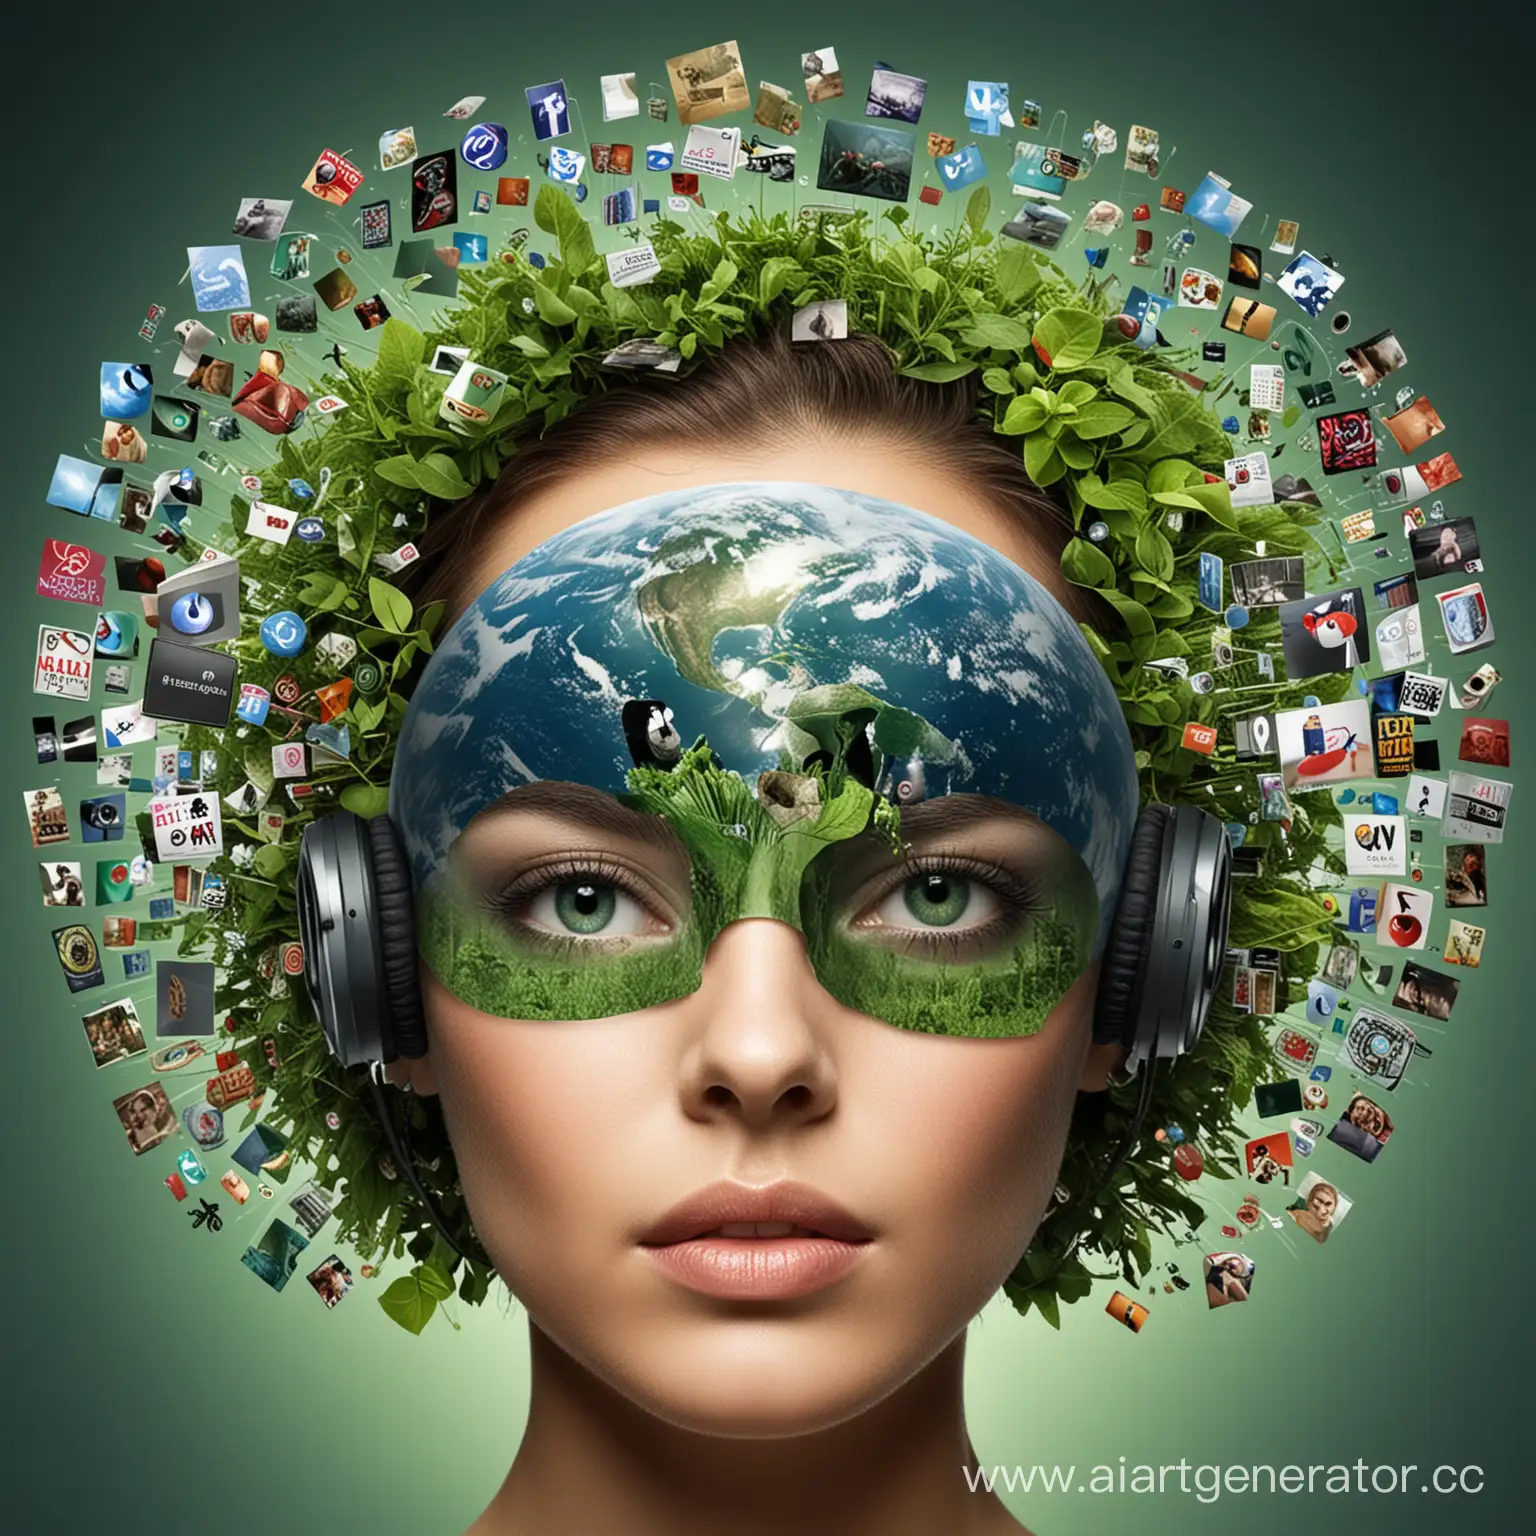 Medias-Impact-on-Ecology-Environmental-Awareness-and-Communication